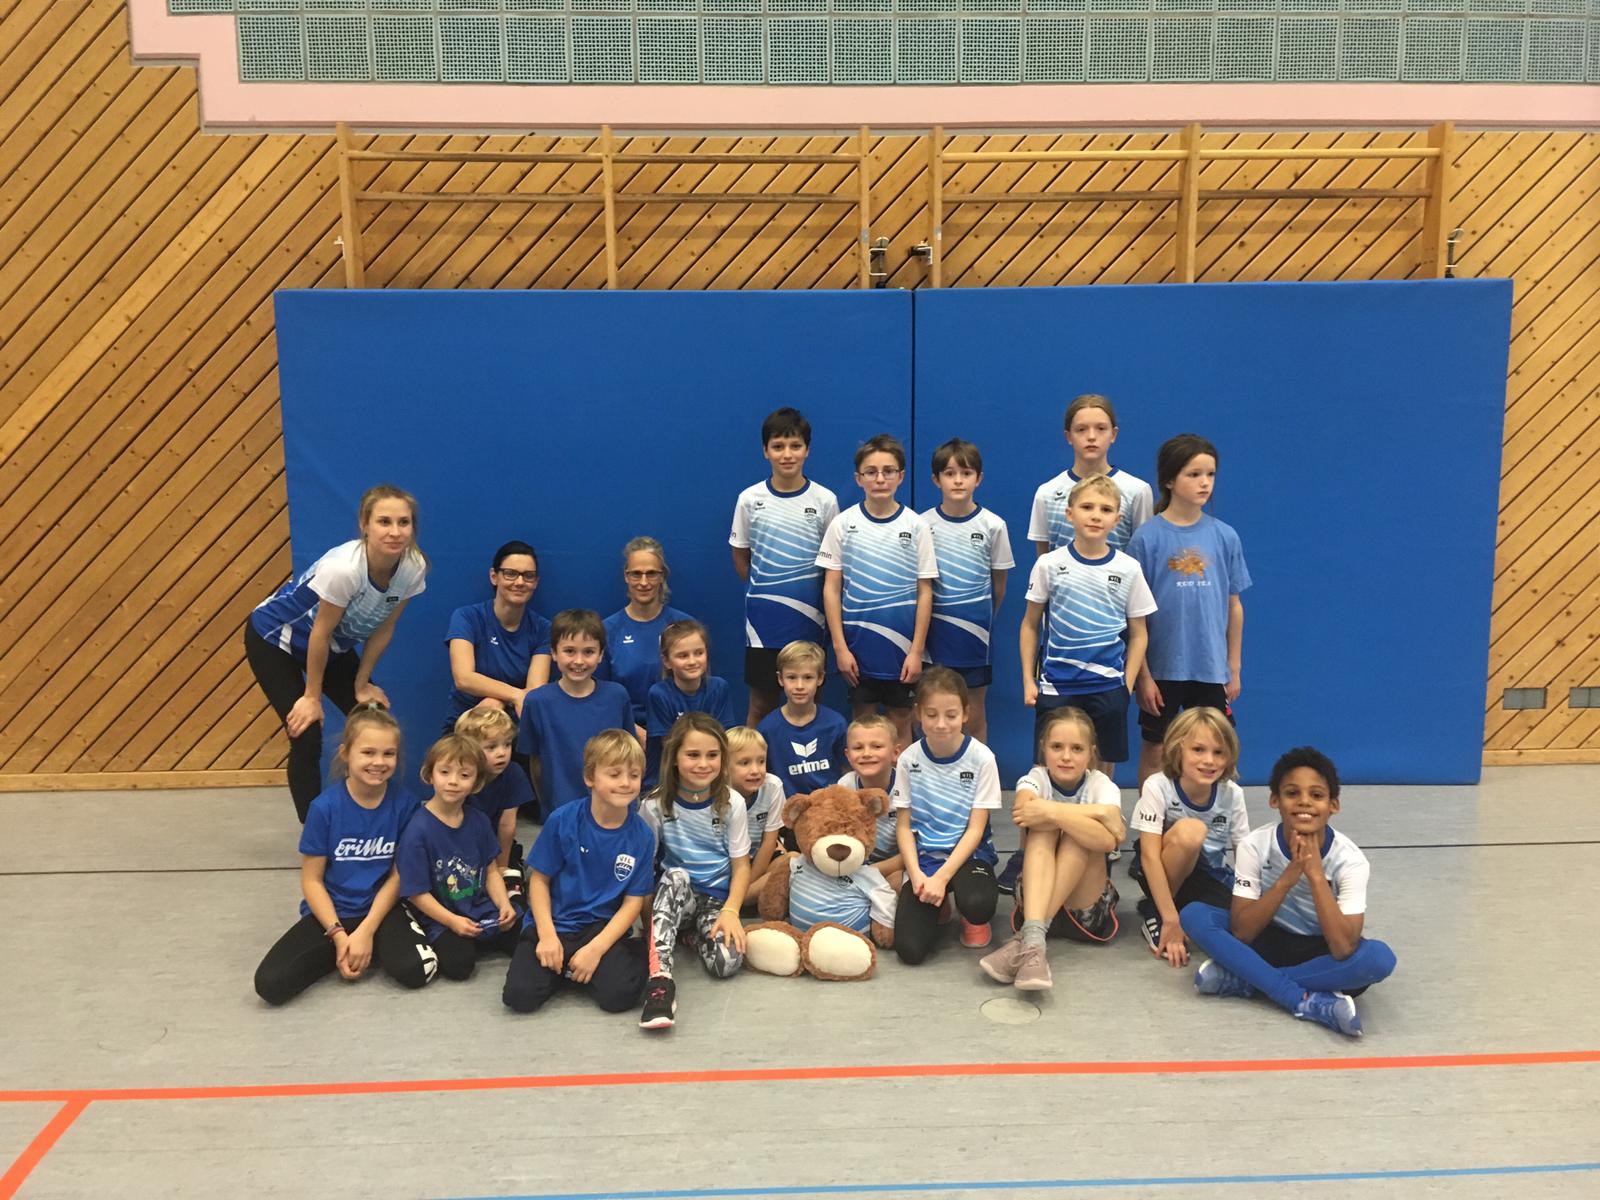 VfL Pfullingen Leichtathletik Kinderleichtathletik